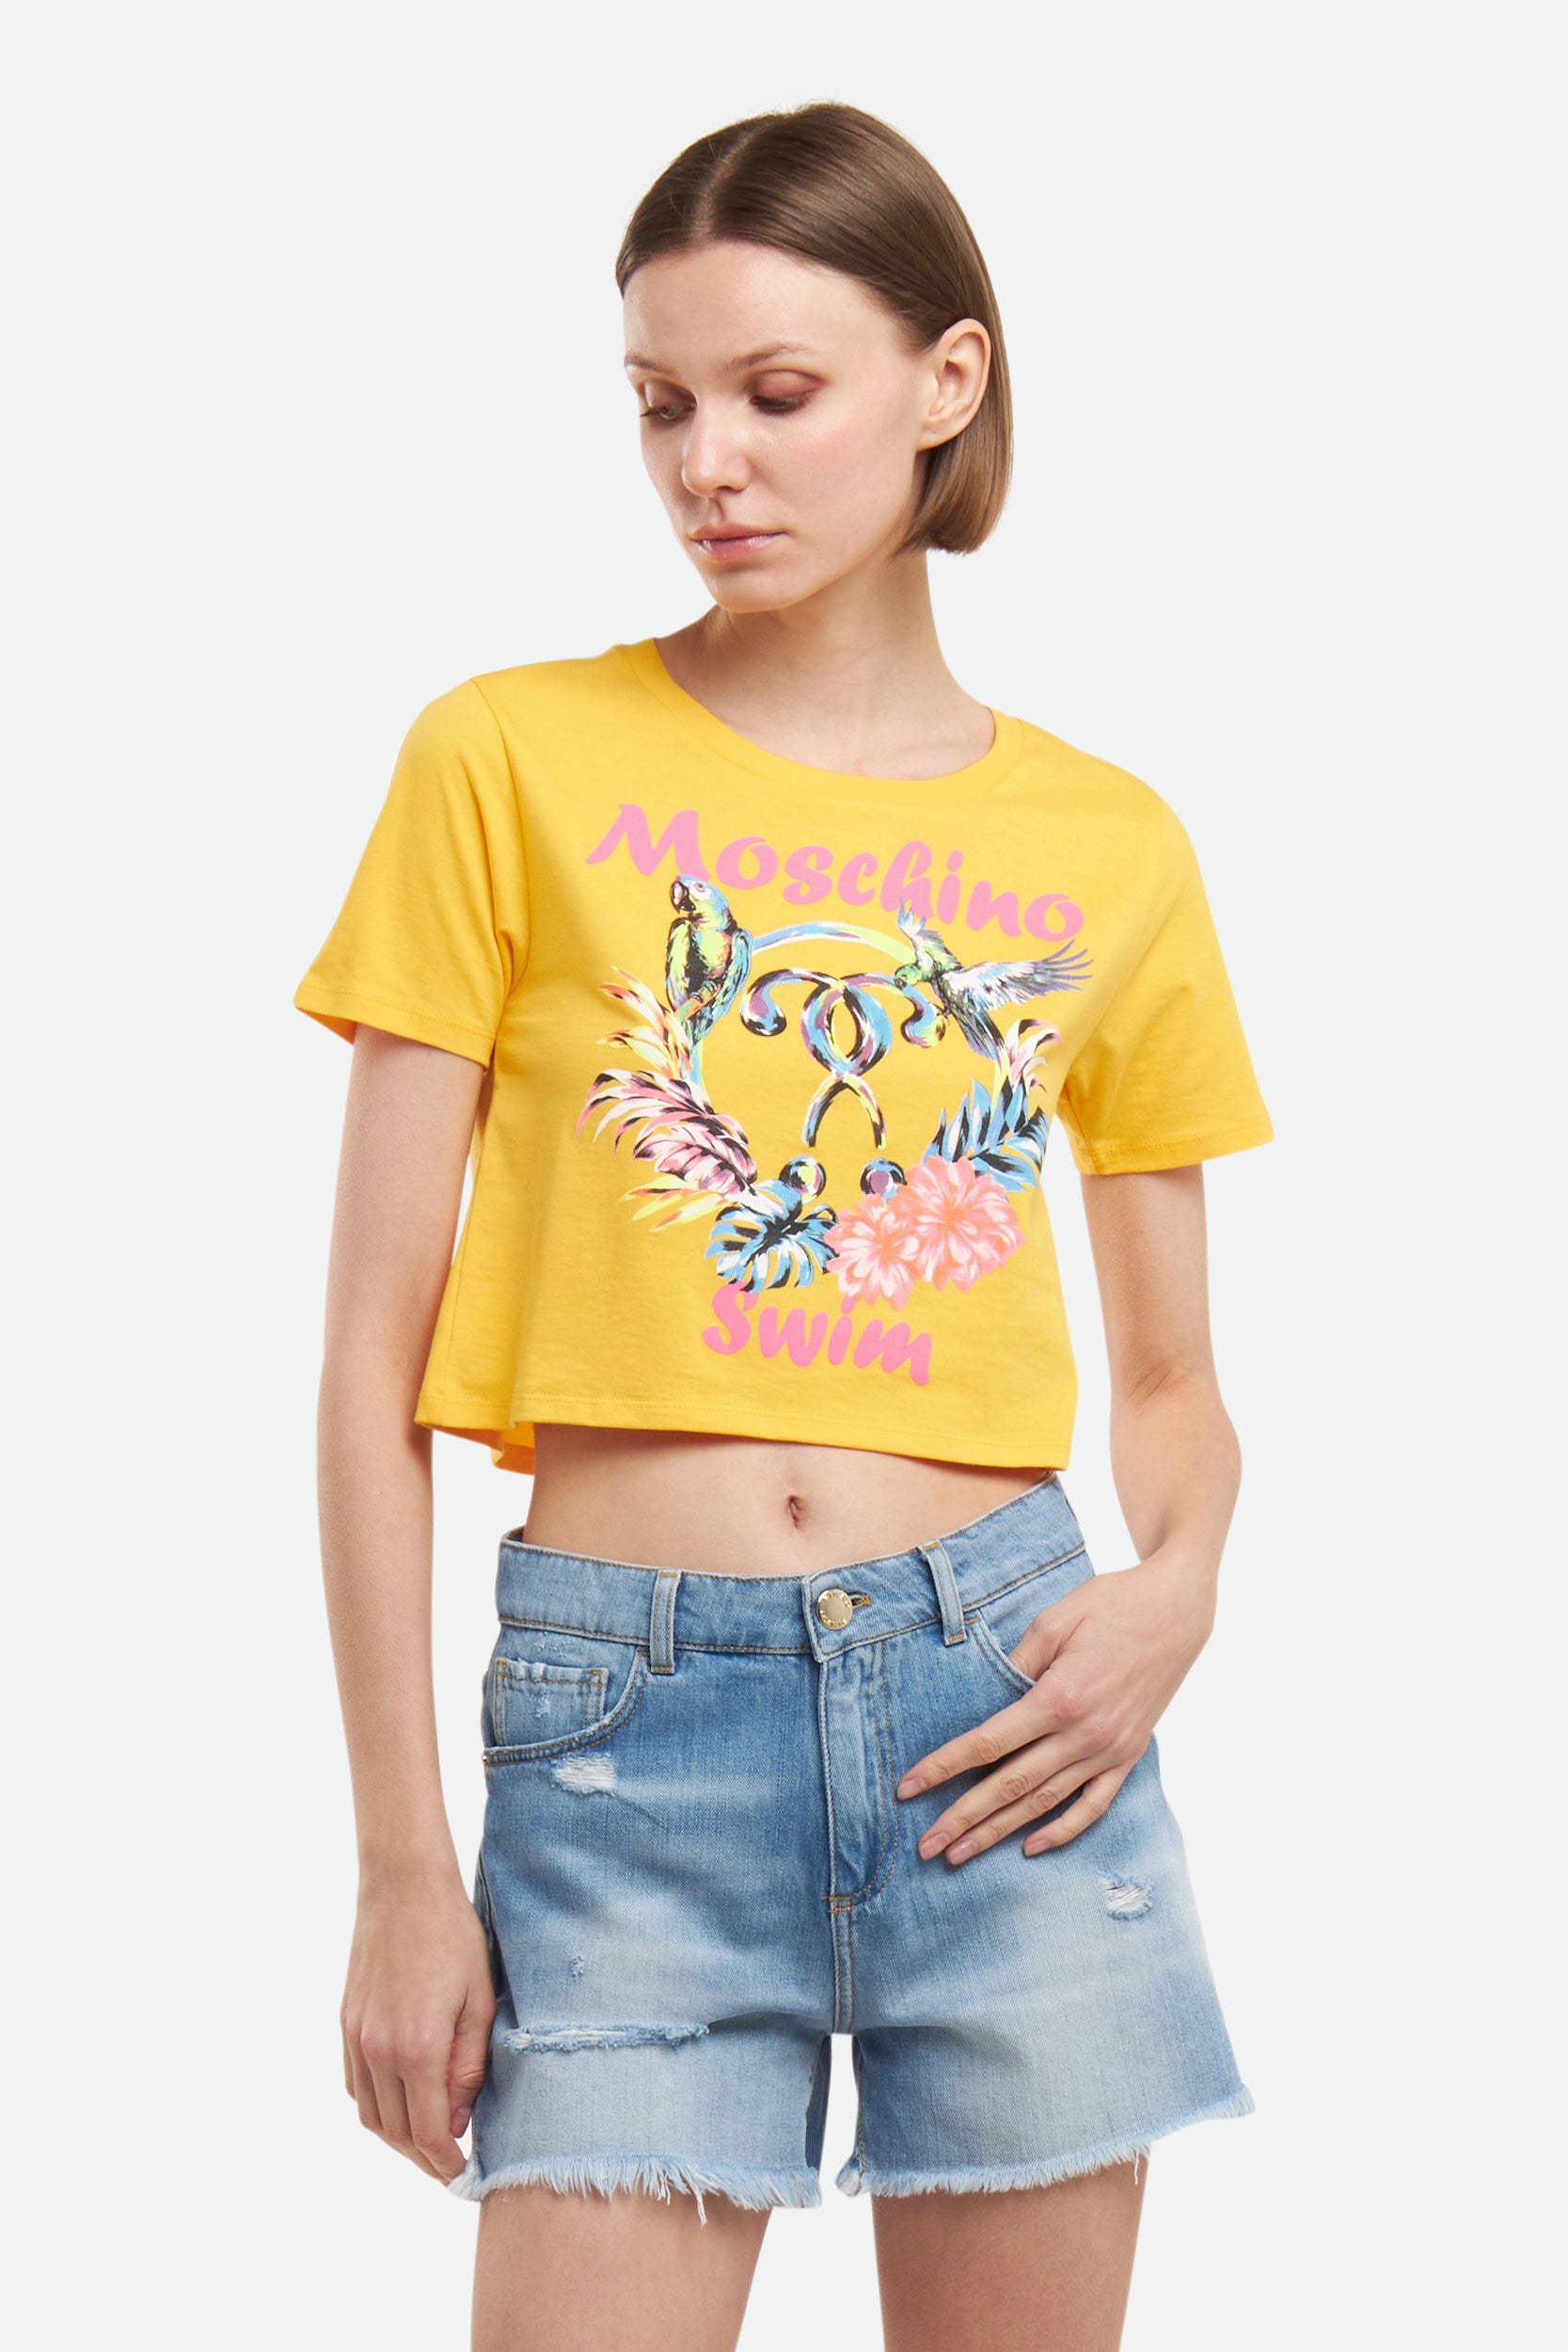 Moschino Gelbes T-Shirt